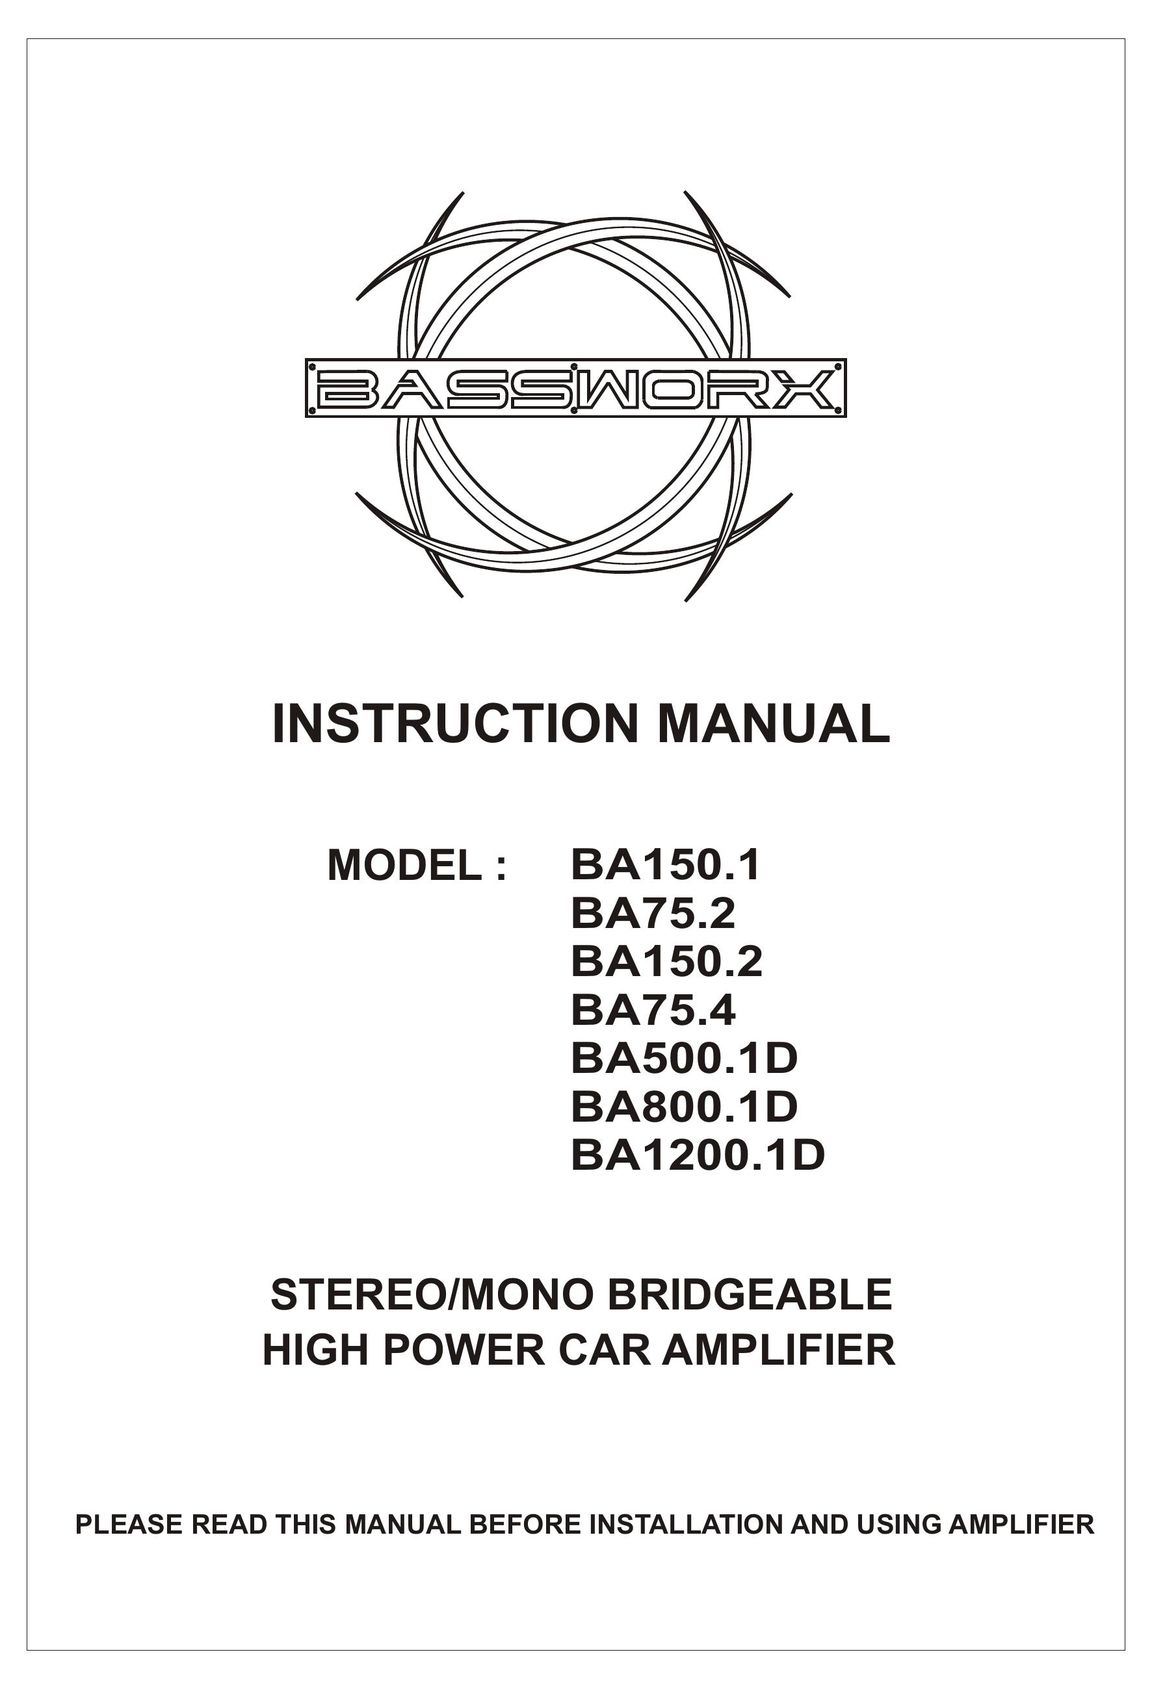 Bassworx BA500.1D Car Amplifier User Manual